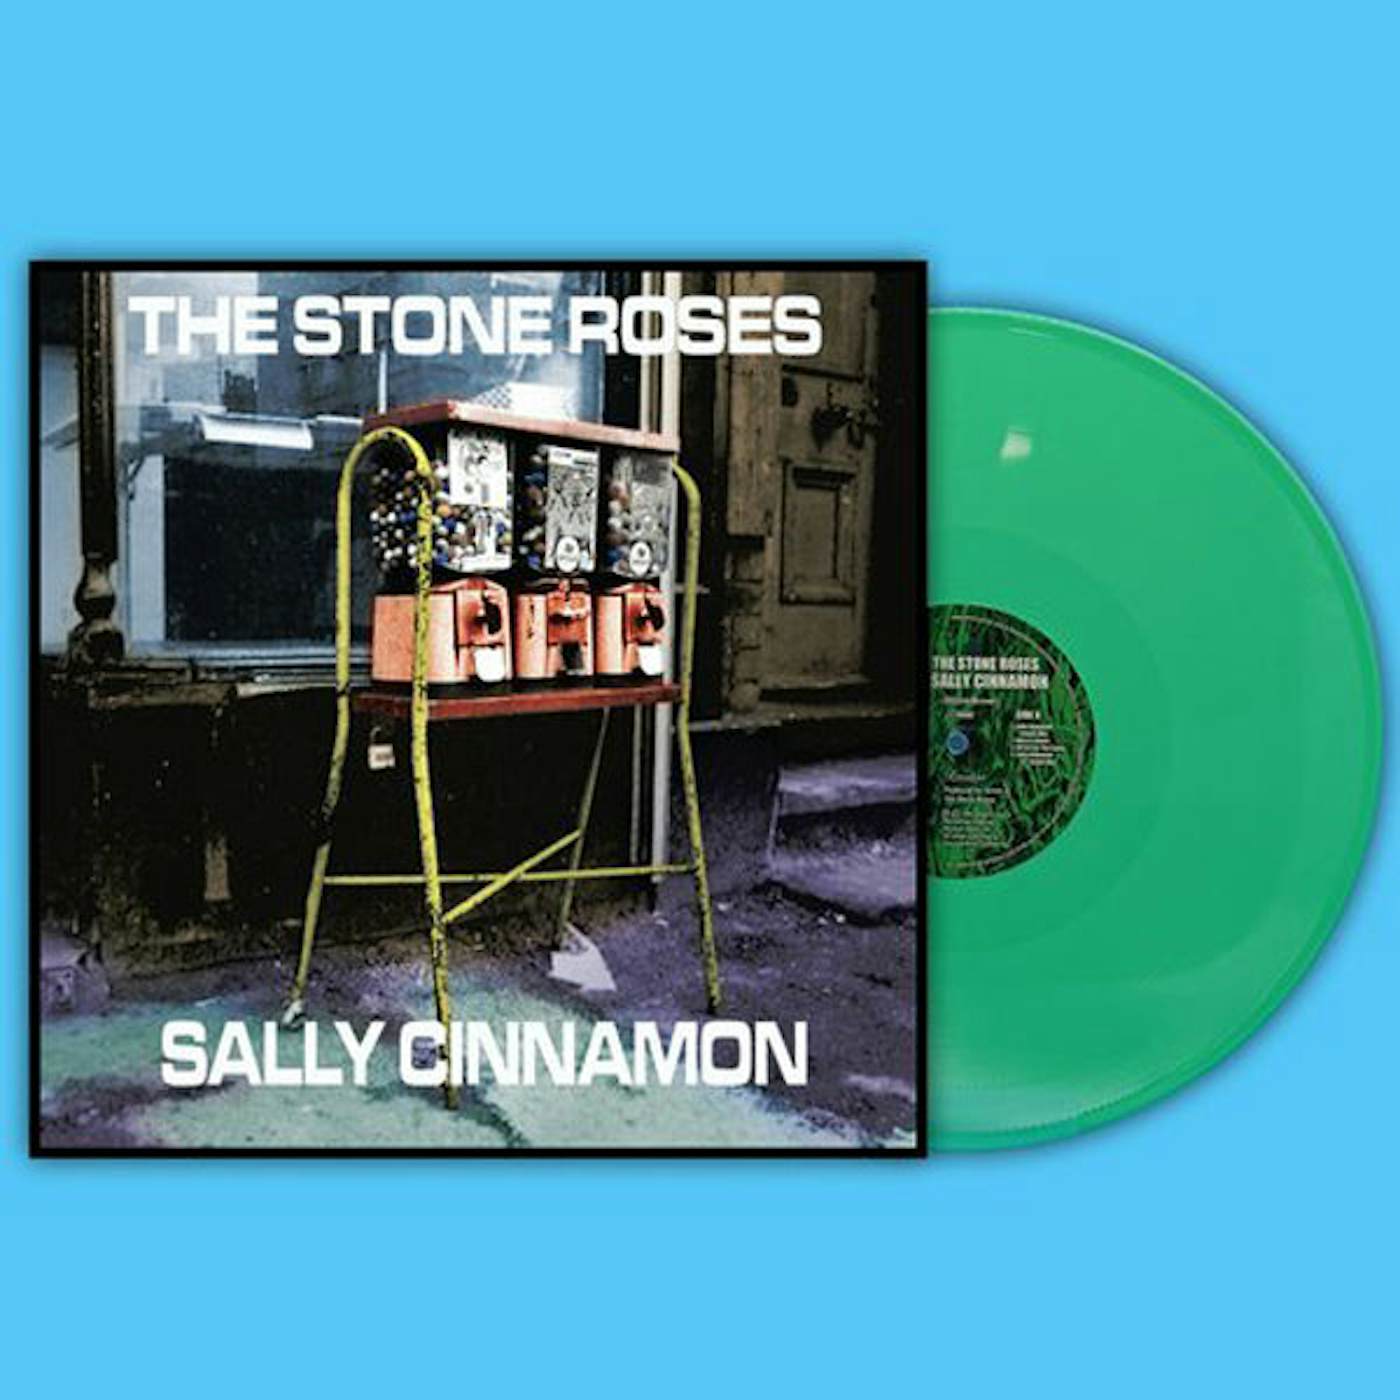 The Stone Roses LP - Sally Cinnamon + Live (Green Vinyl)